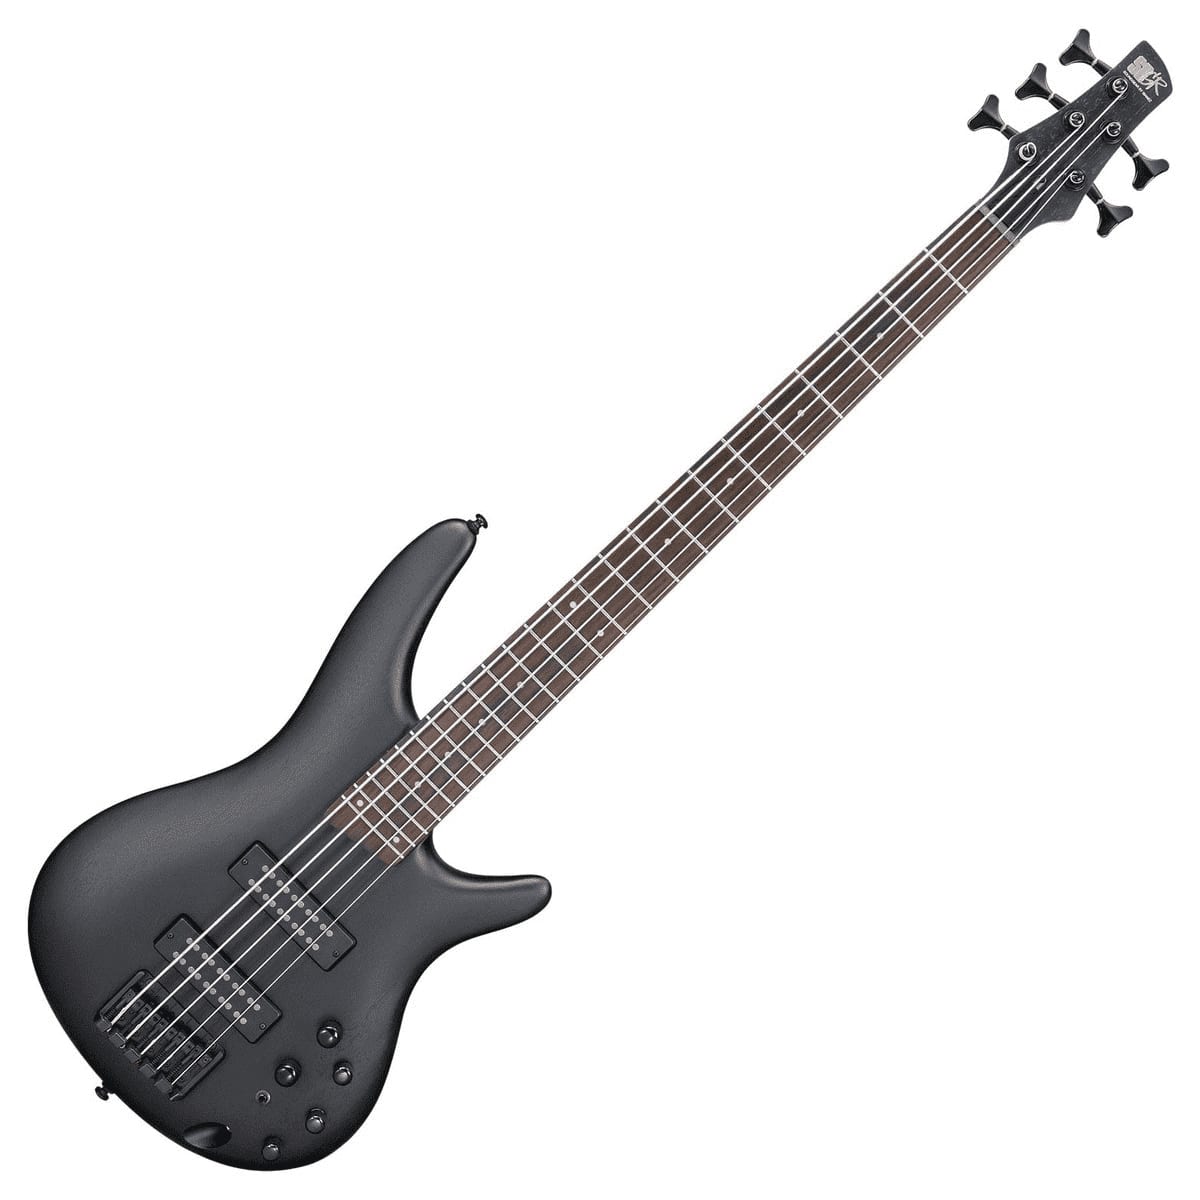 Ibanez SR305EB Weathered Black bass guitar